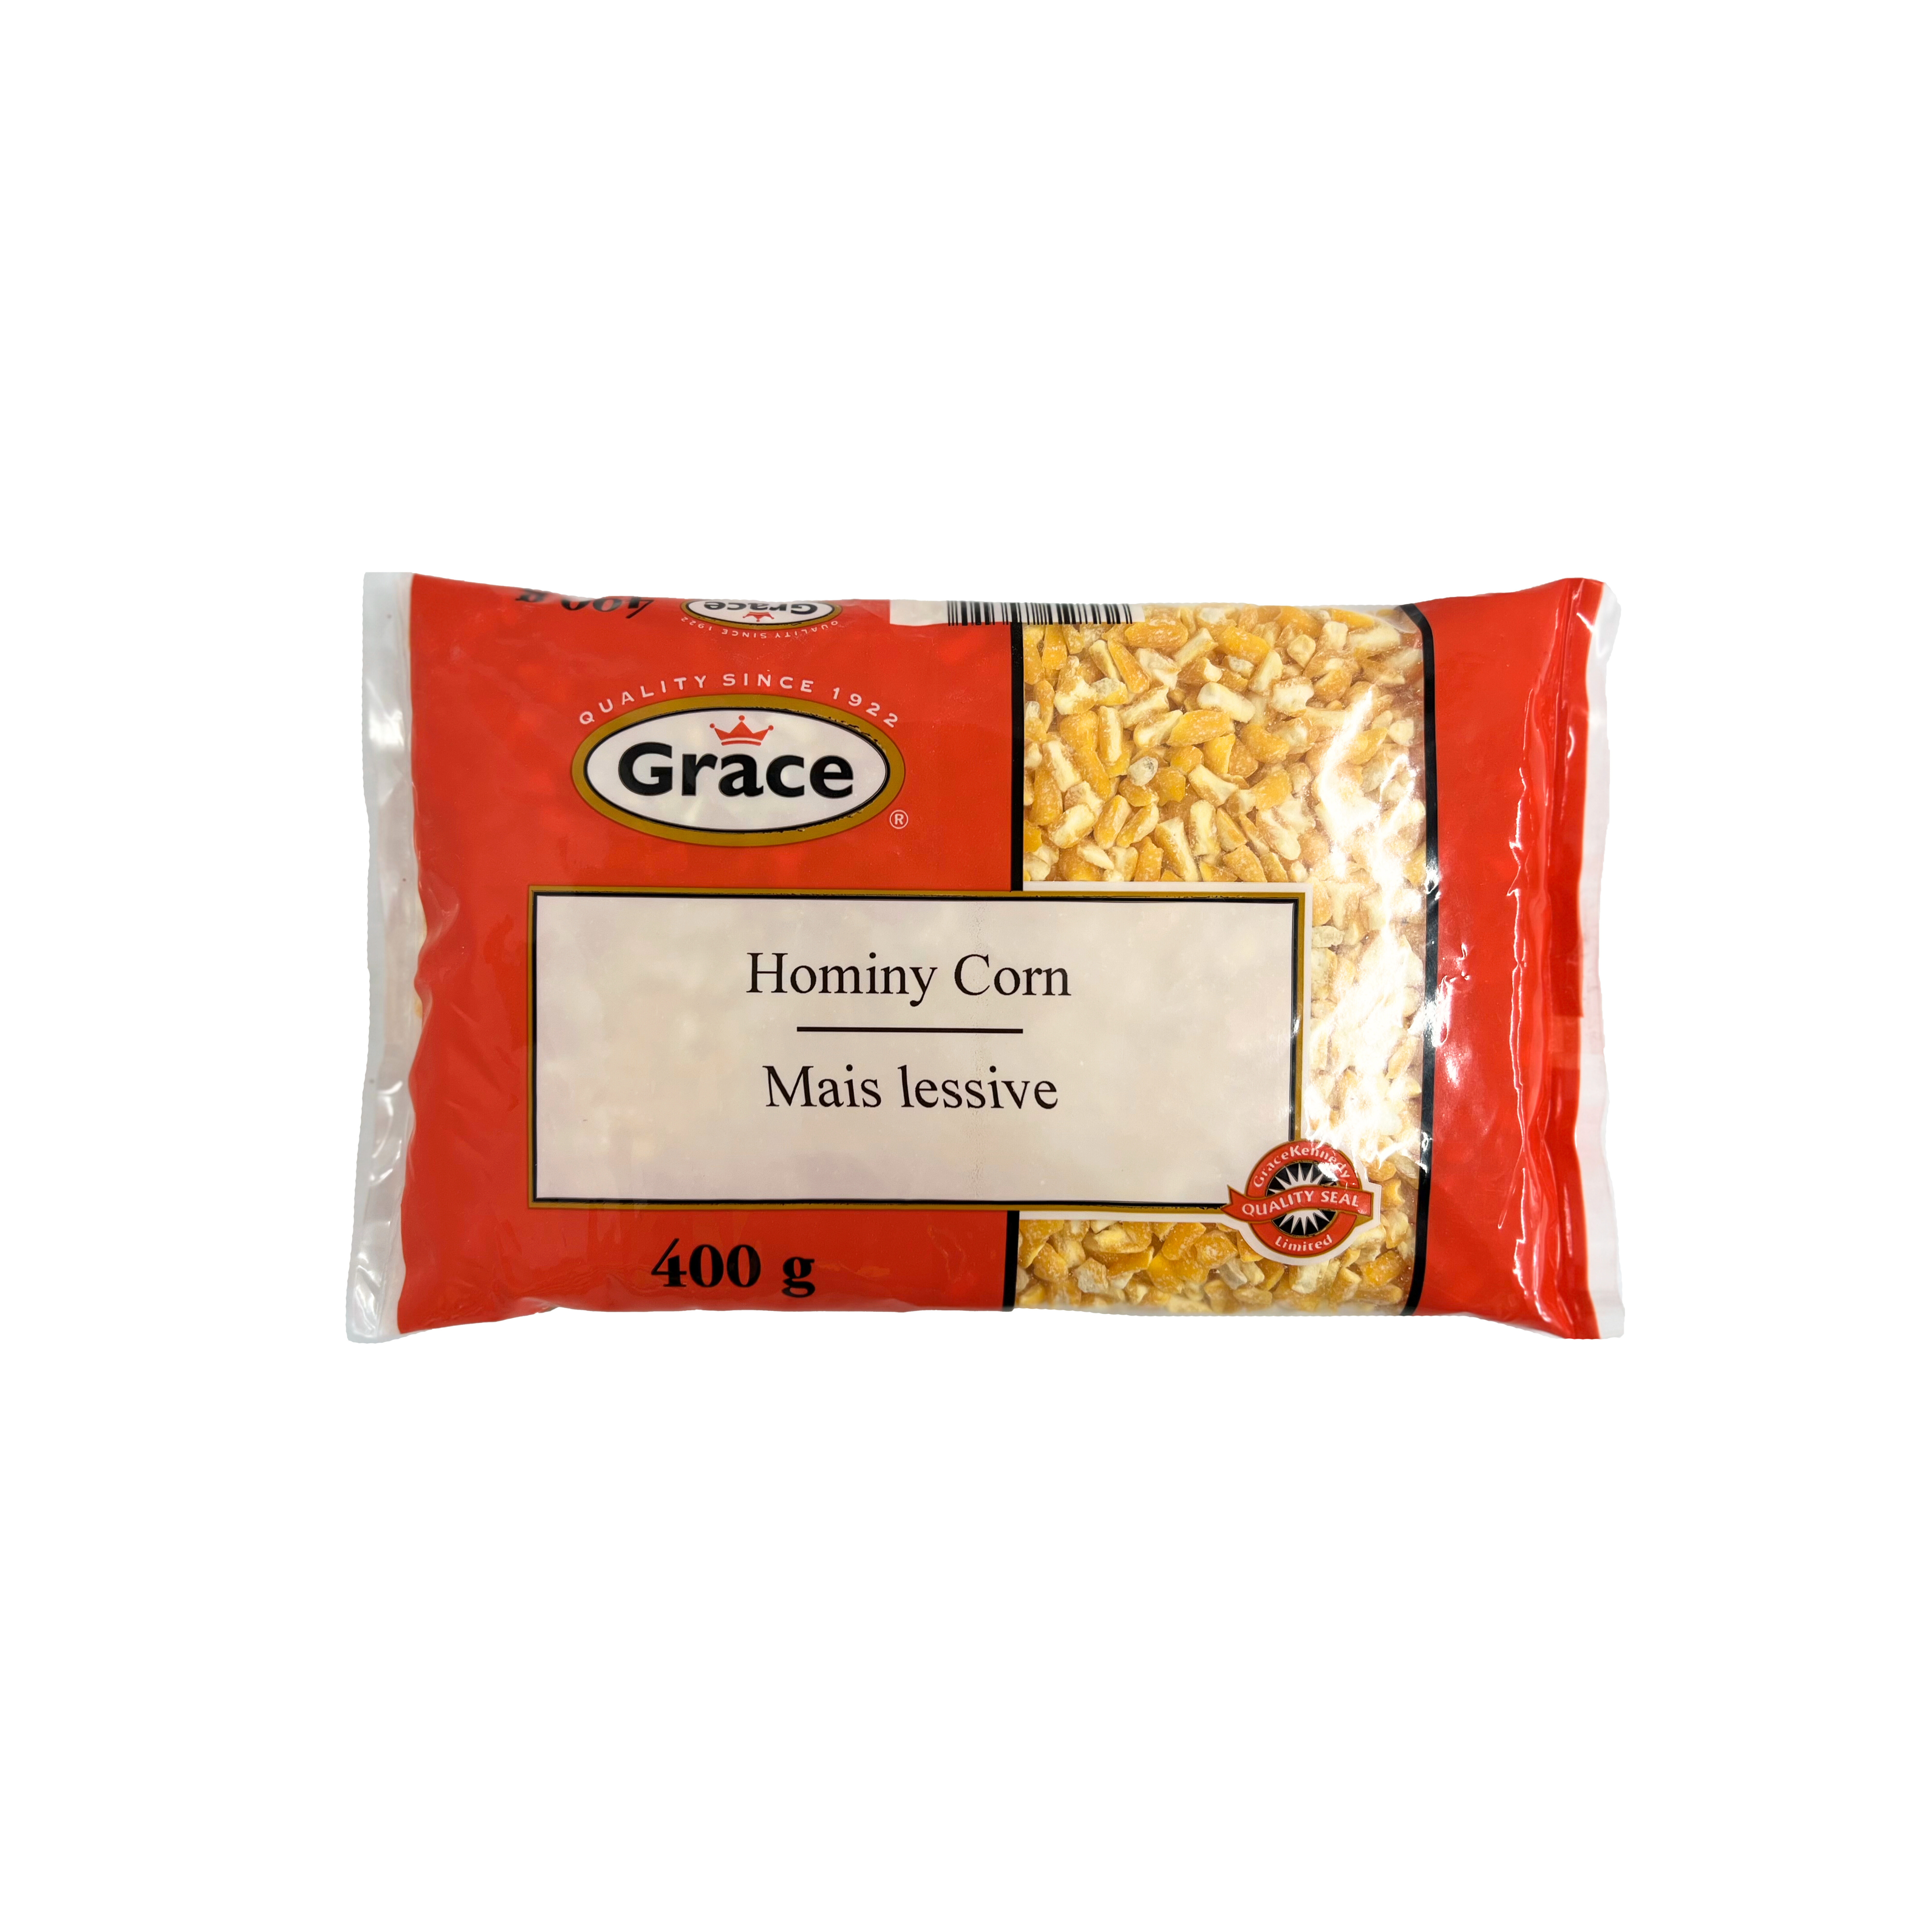 Grace Hominy Corn 400g